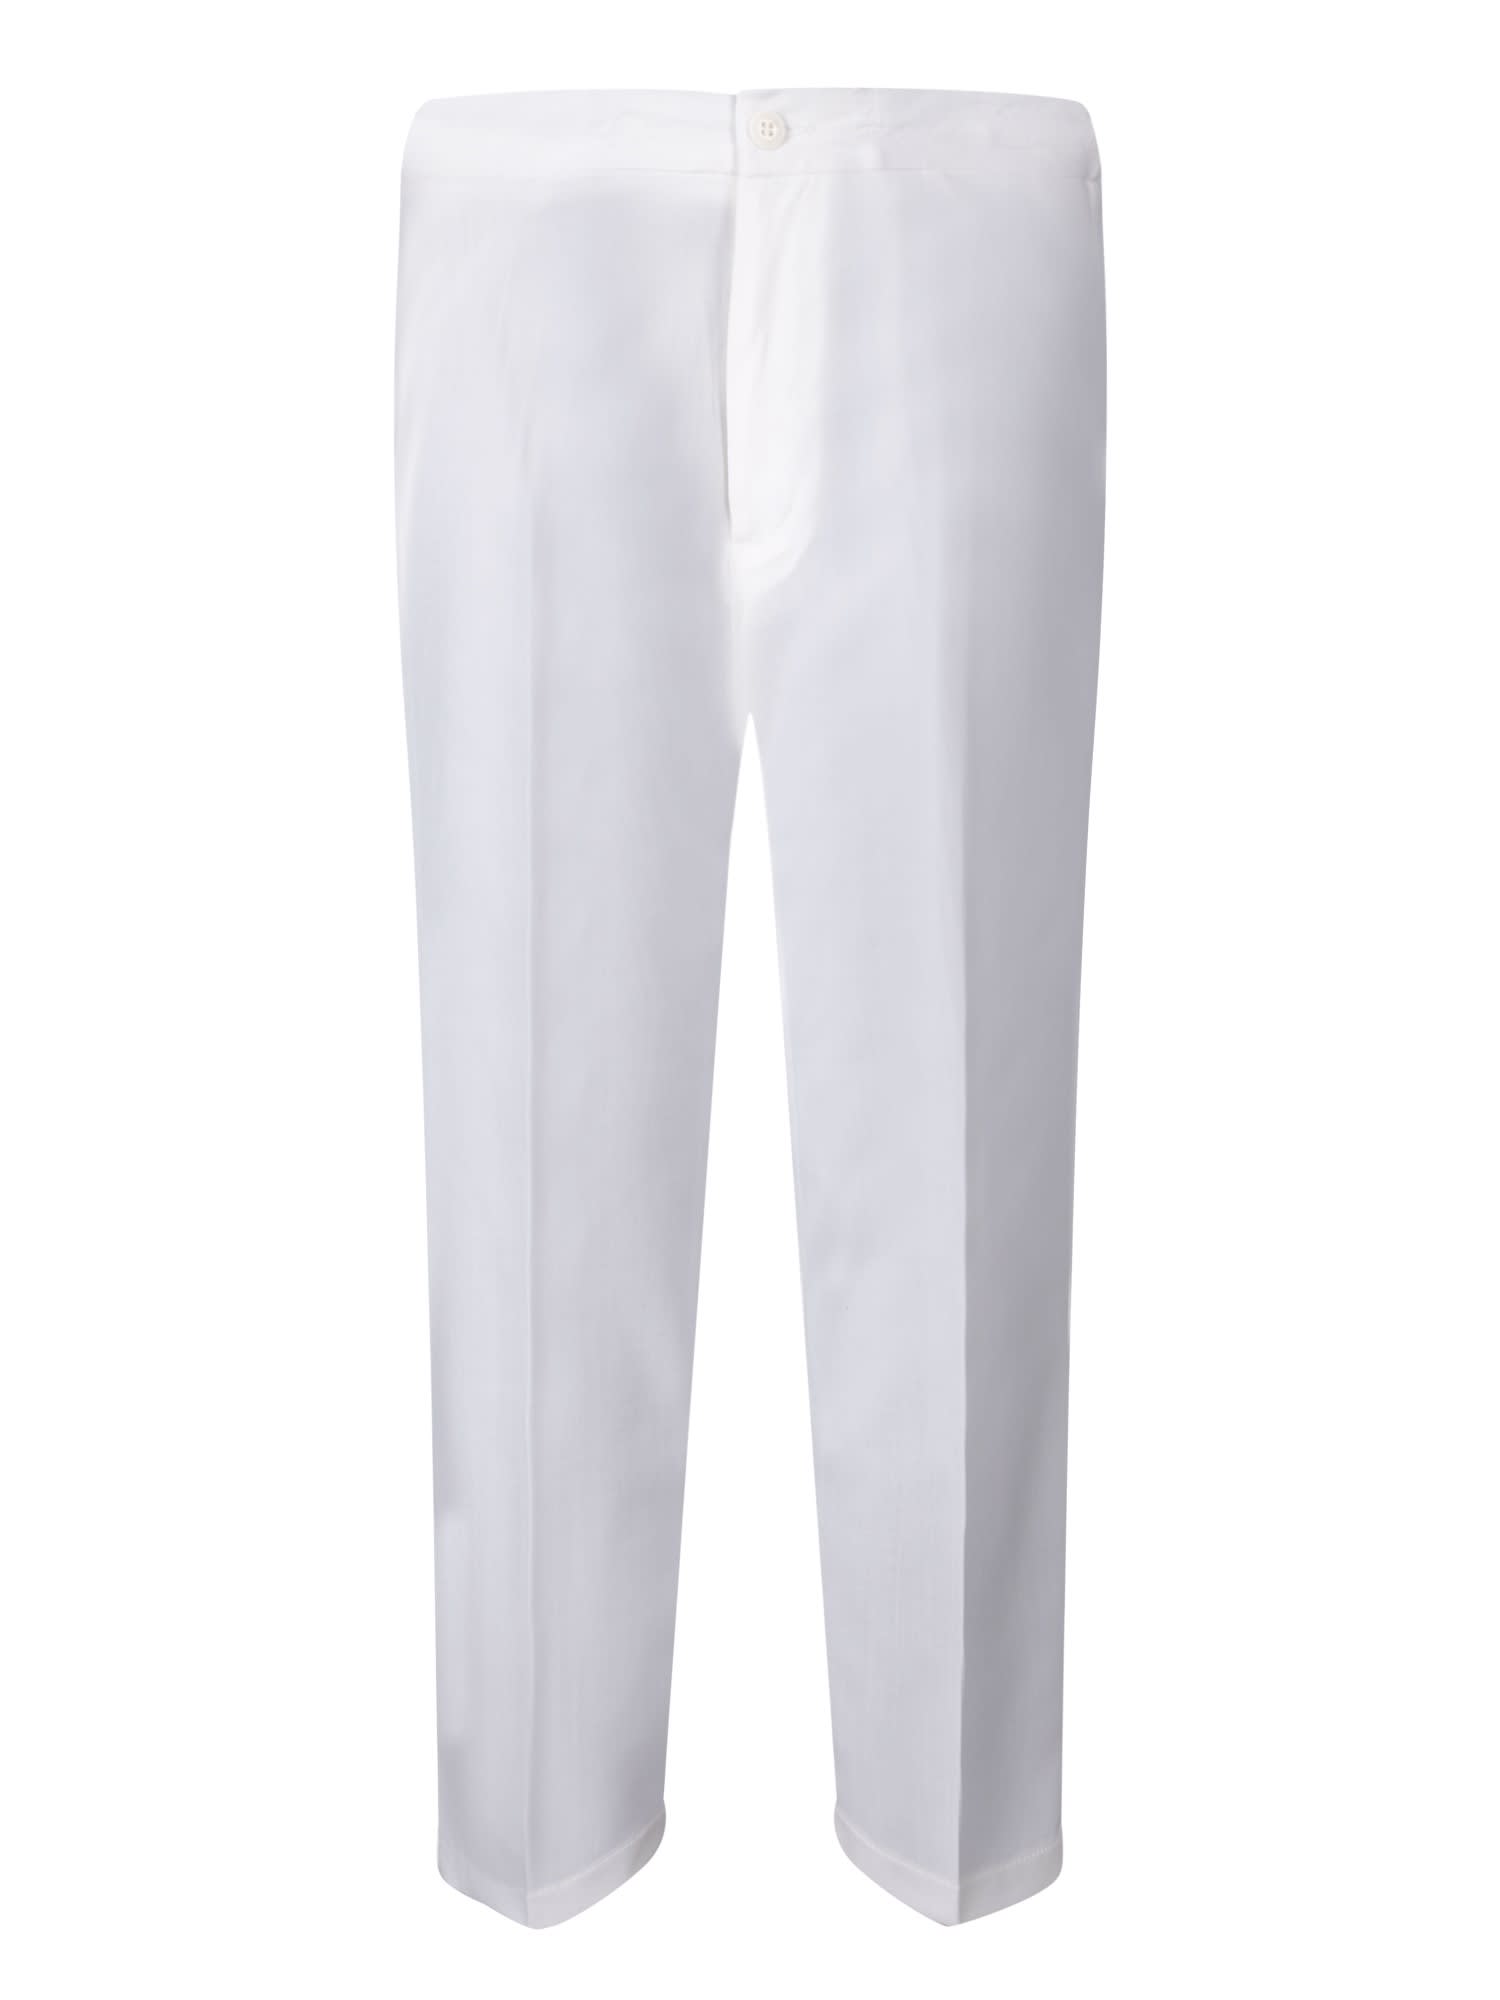 Jean19 White Trousers